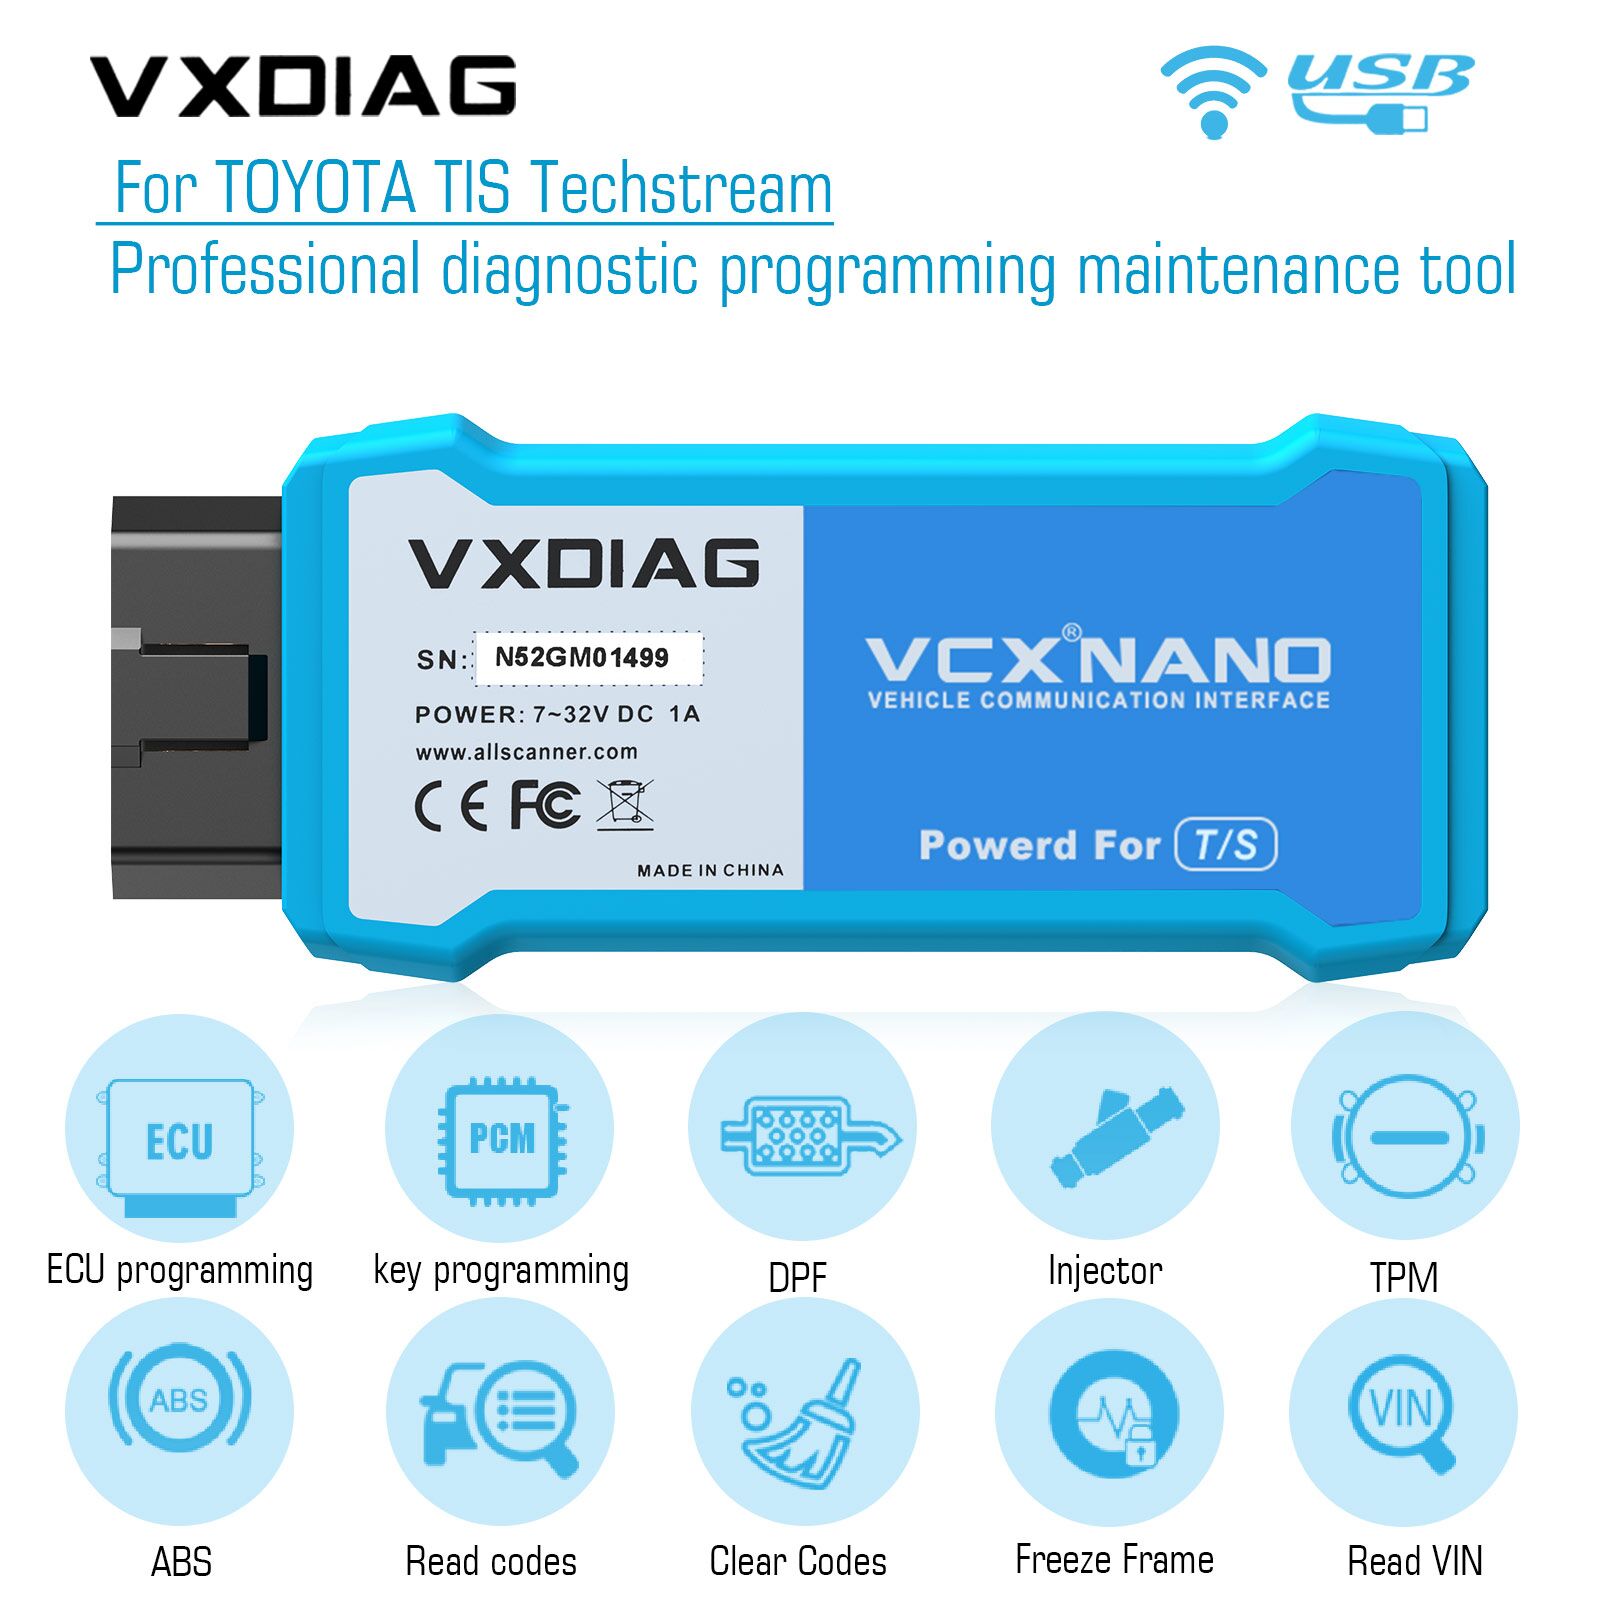 Wifi VXDiag VCX Nano for Toyota TIS Techstream